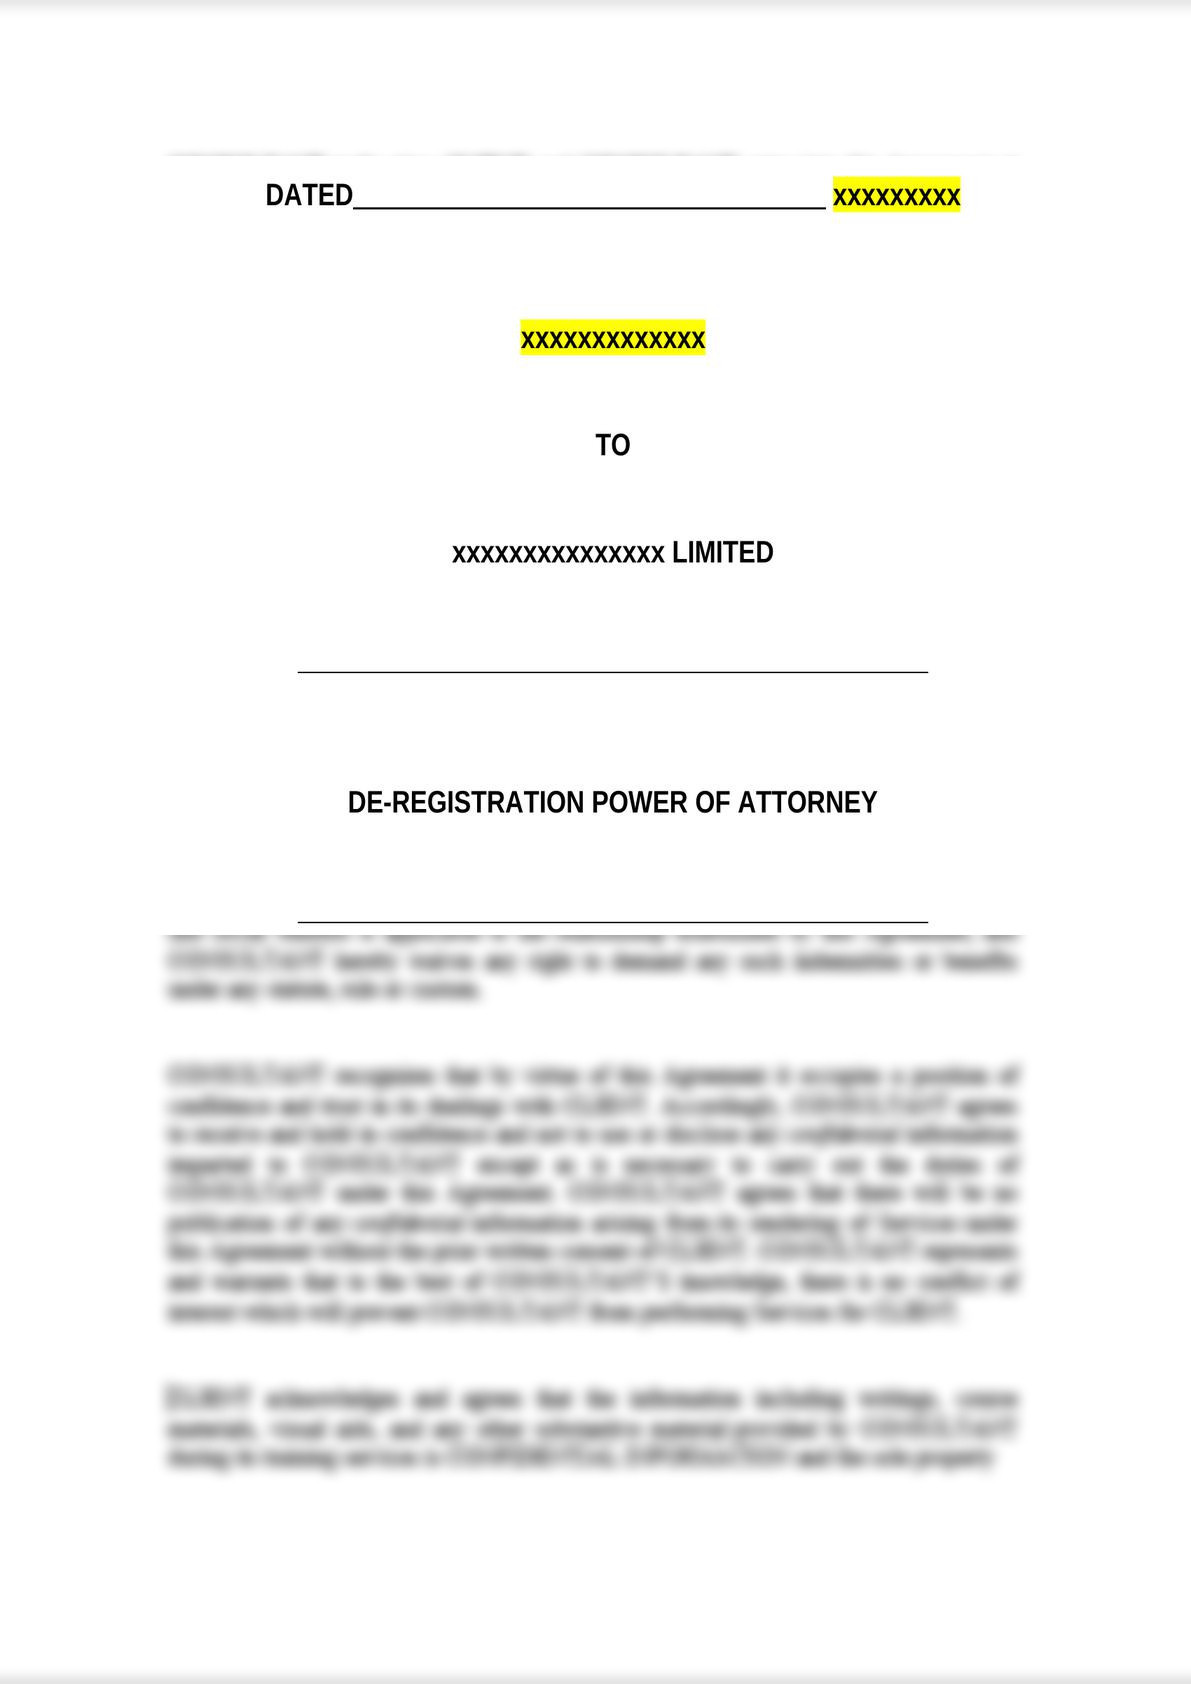 Power of Attorney - De-registration-0